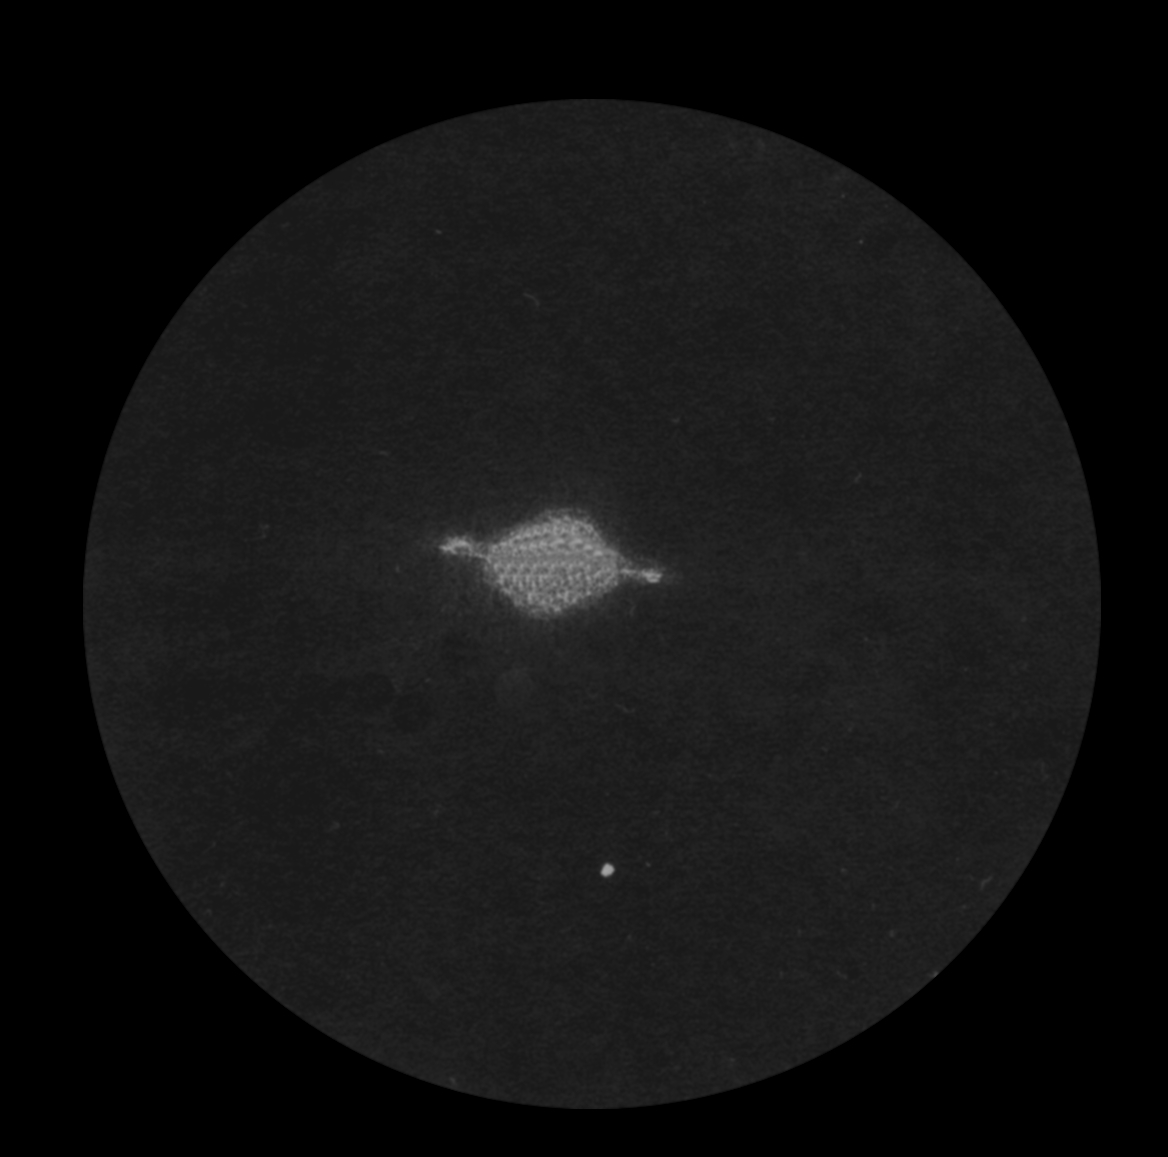 NGC7009.jpg